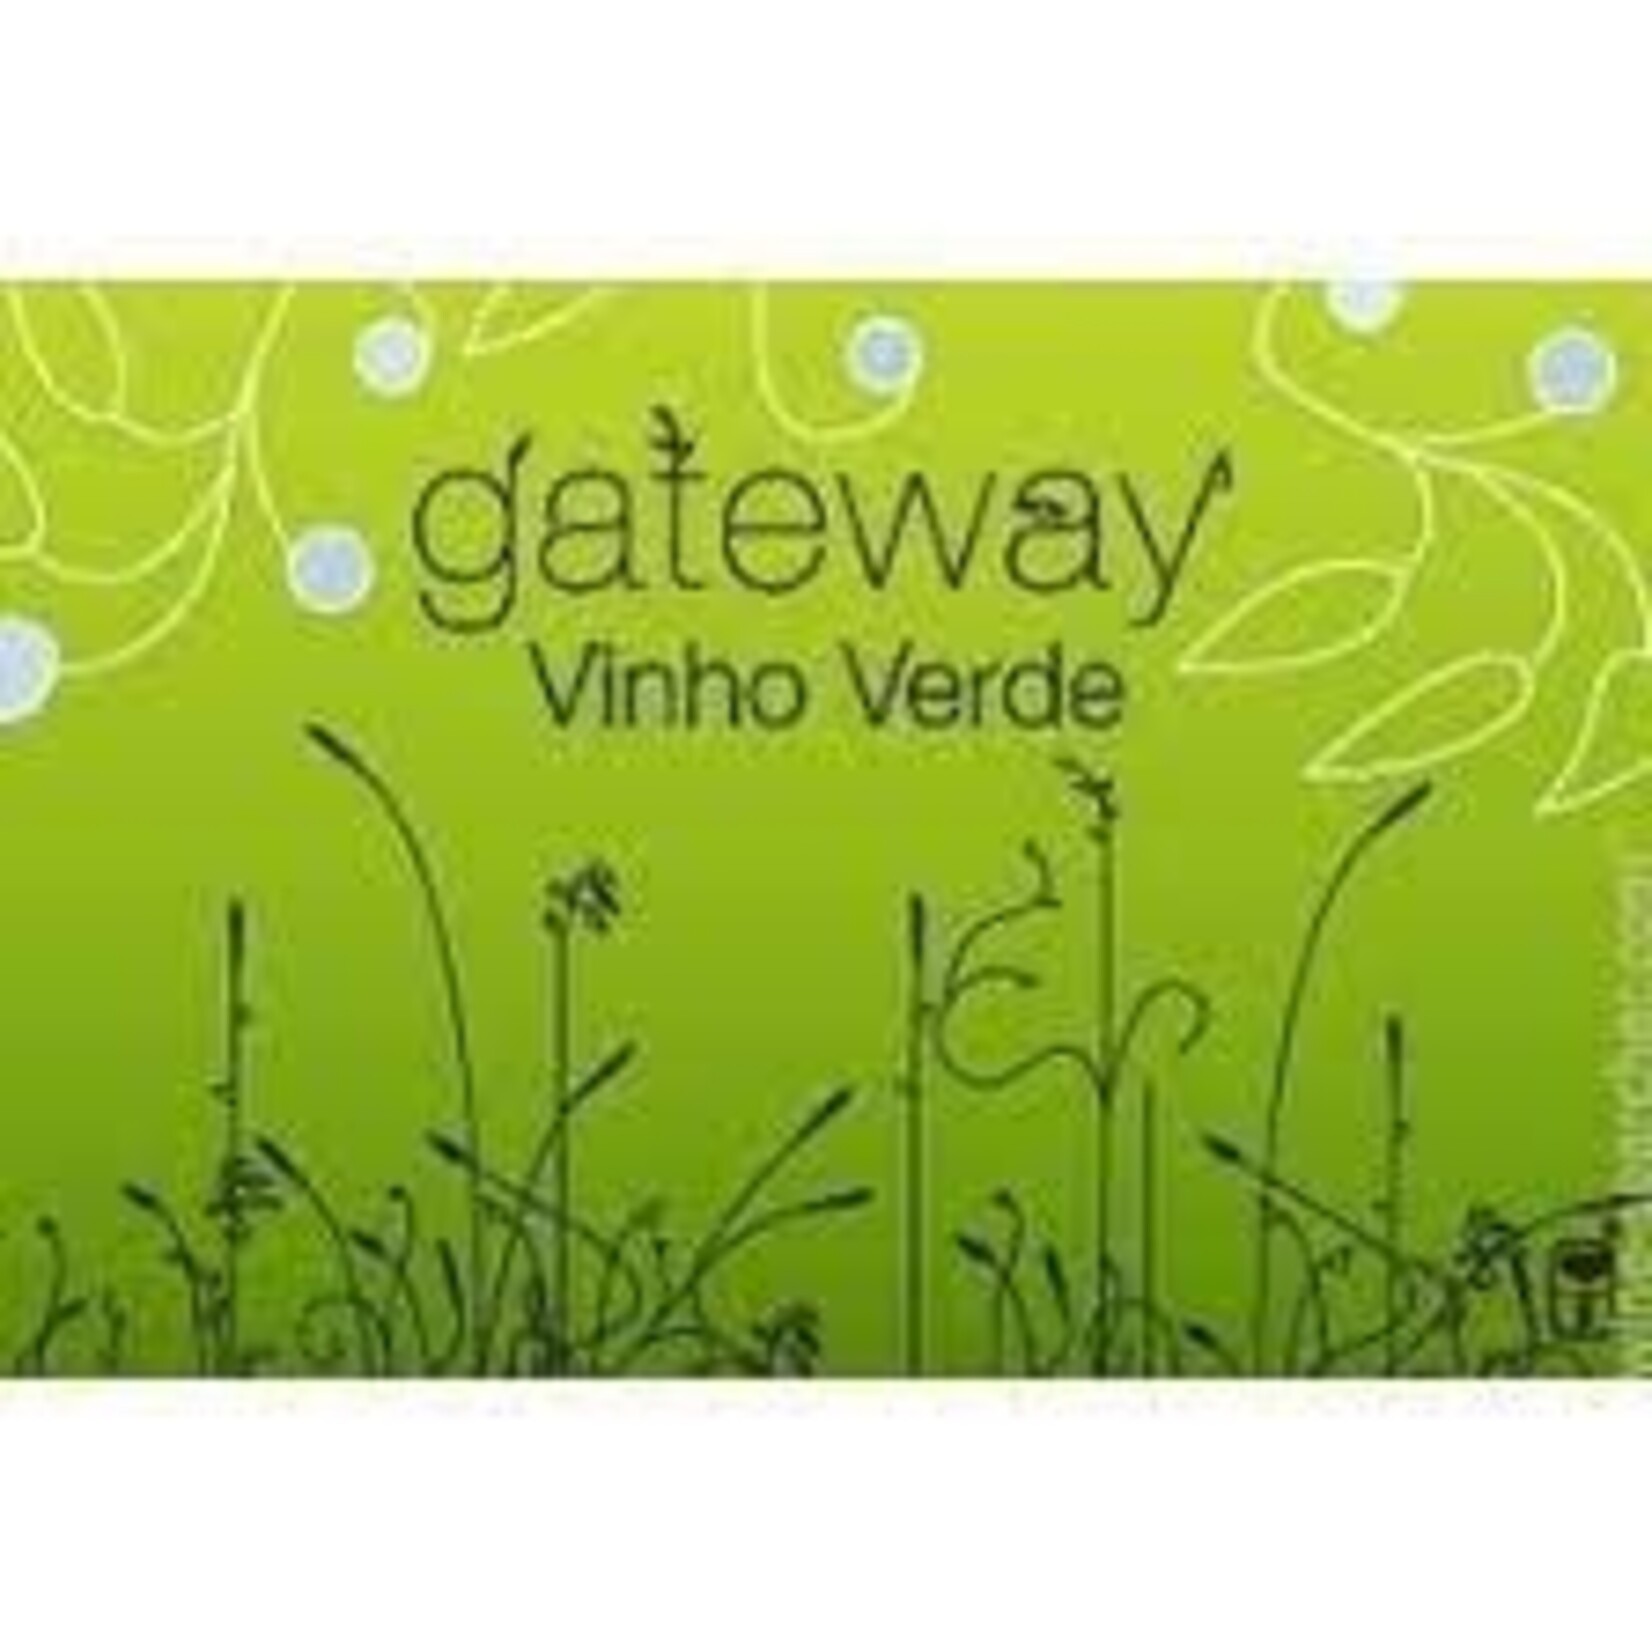 Gateway Vinho Verde 2021,  Portugal